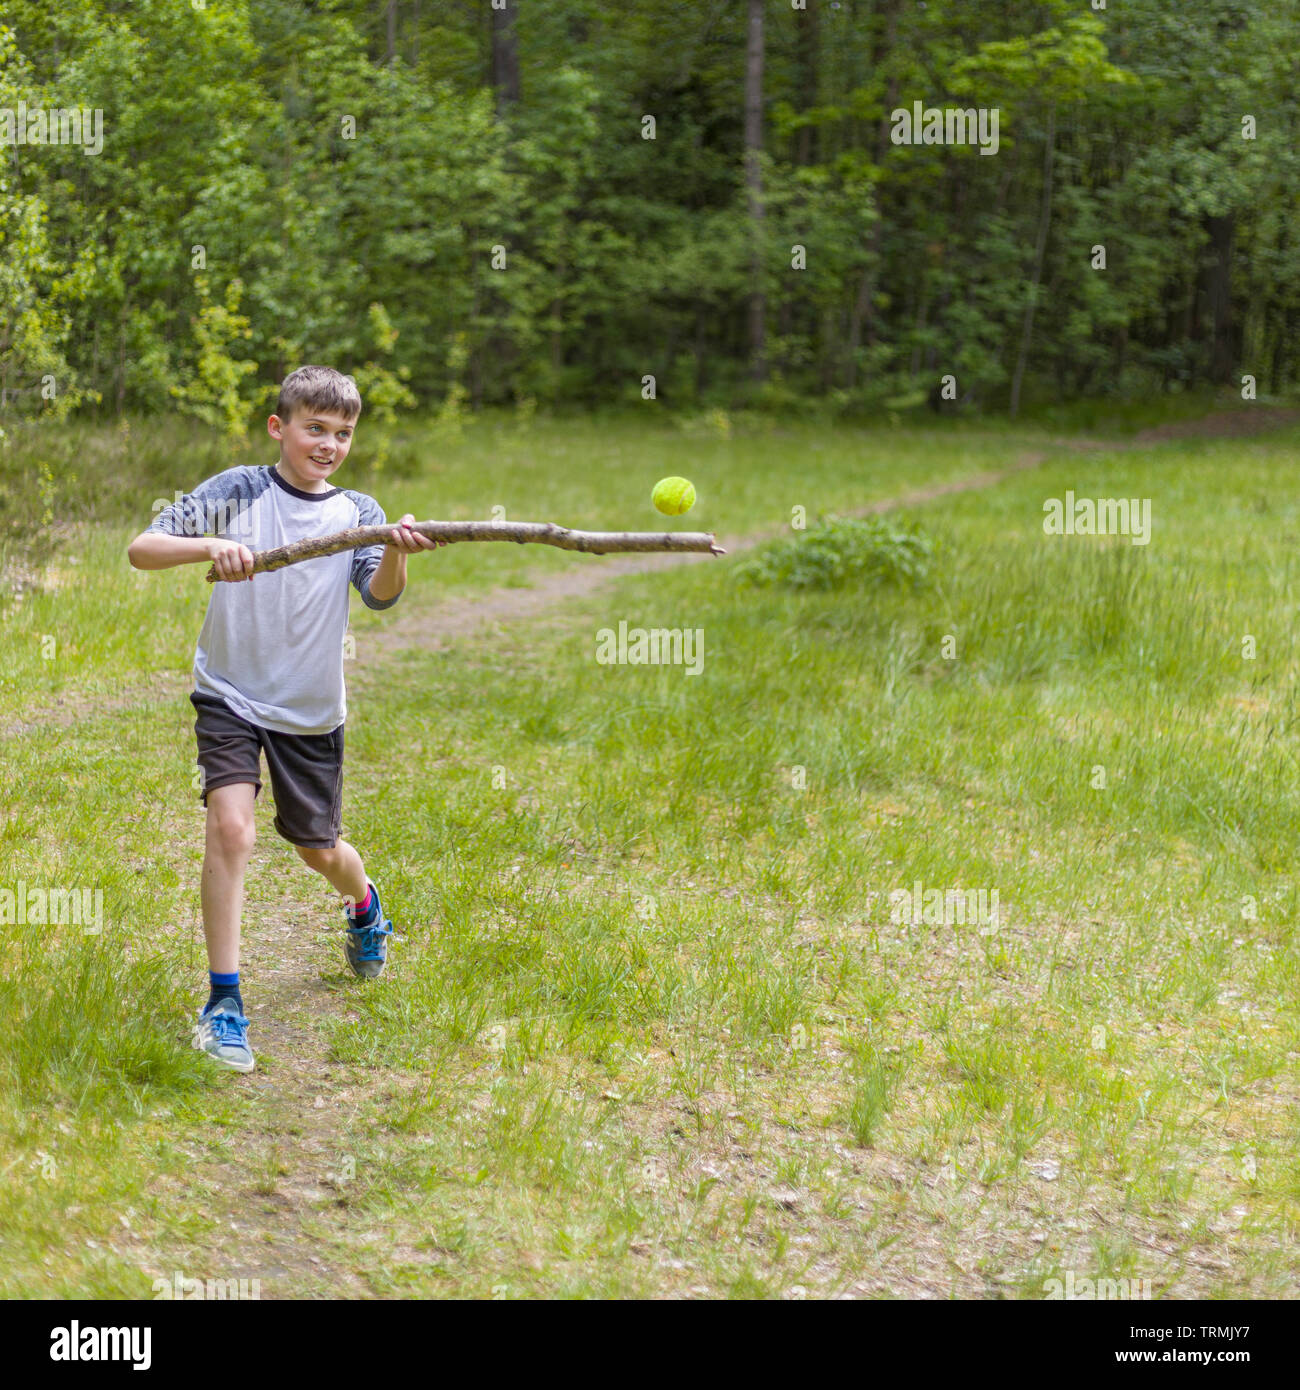 https://c8.alamy.com/comp/TRMJY7/young-boy-playing-baseball-or-rounders-hitting-tennis-ball-with-wooden-stick-TRMJY7.jpg